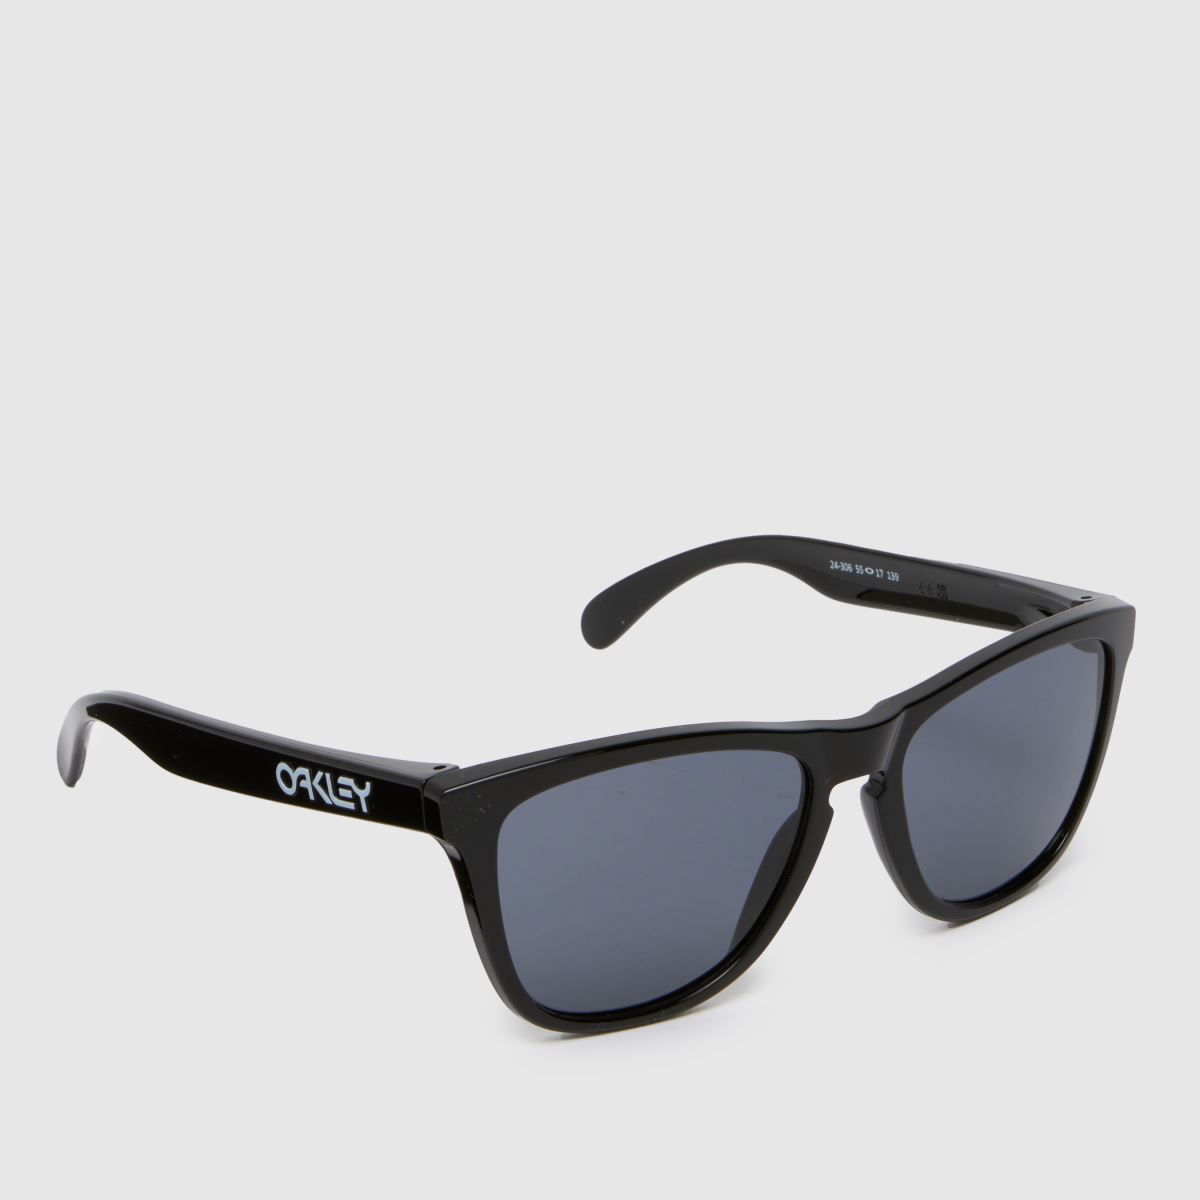 Oakley black frogskins sunglasses